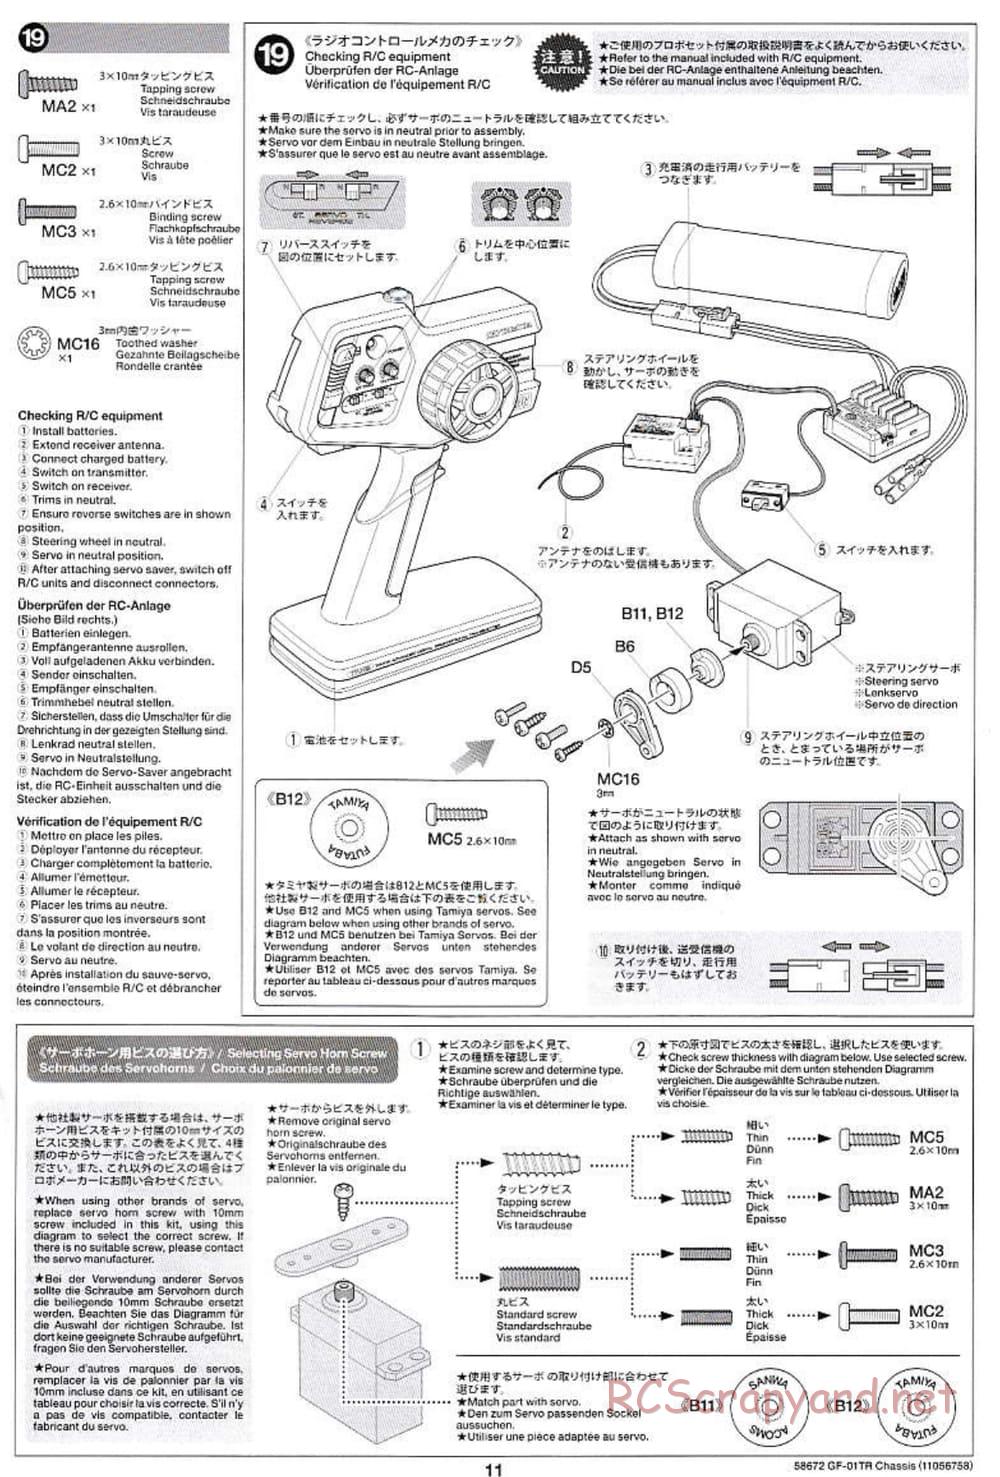 Tamiya - Monster Beetle Trail - GF-01TR Chassis - Manual - Page 11